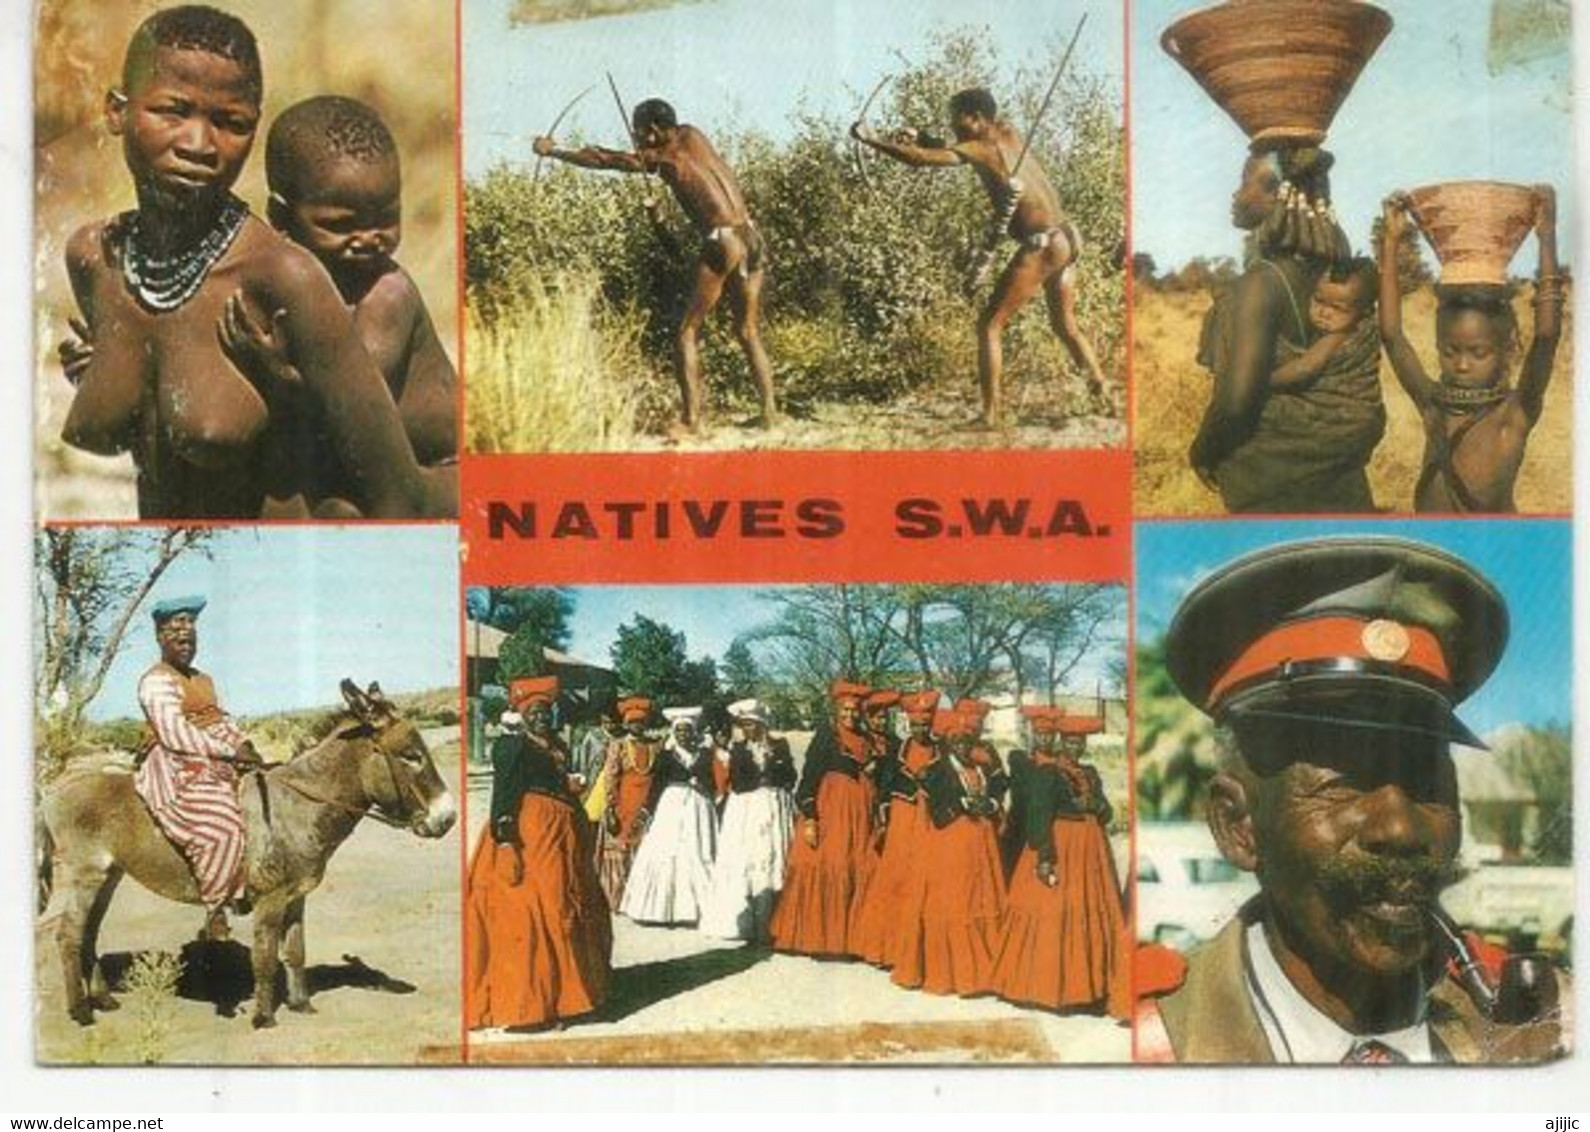 Natives S.W.A , Carte Postale Du Sud-Ouest Africain, Adressée à Andorra - Namibie